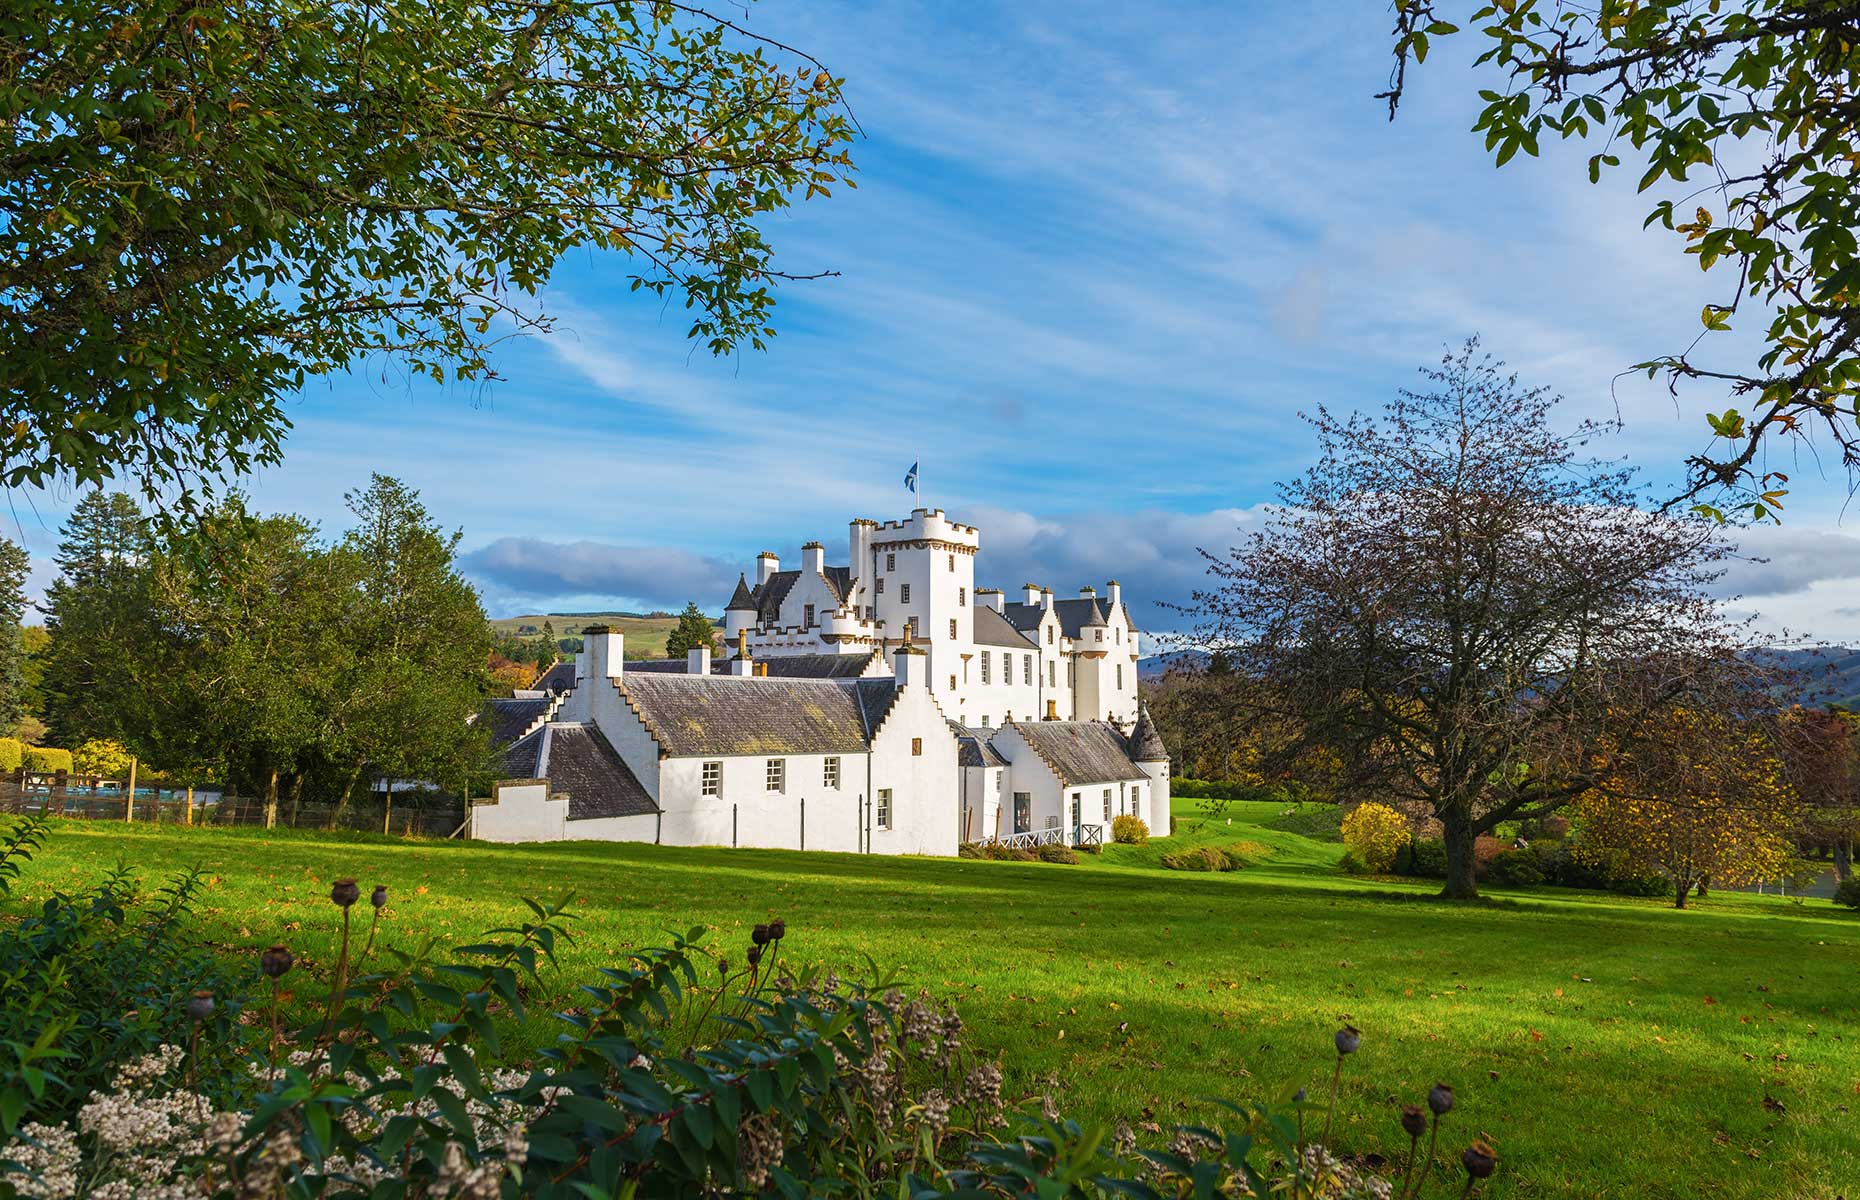 Blair Castle exterior (Images: Natalia Paklina/Shutterstock)